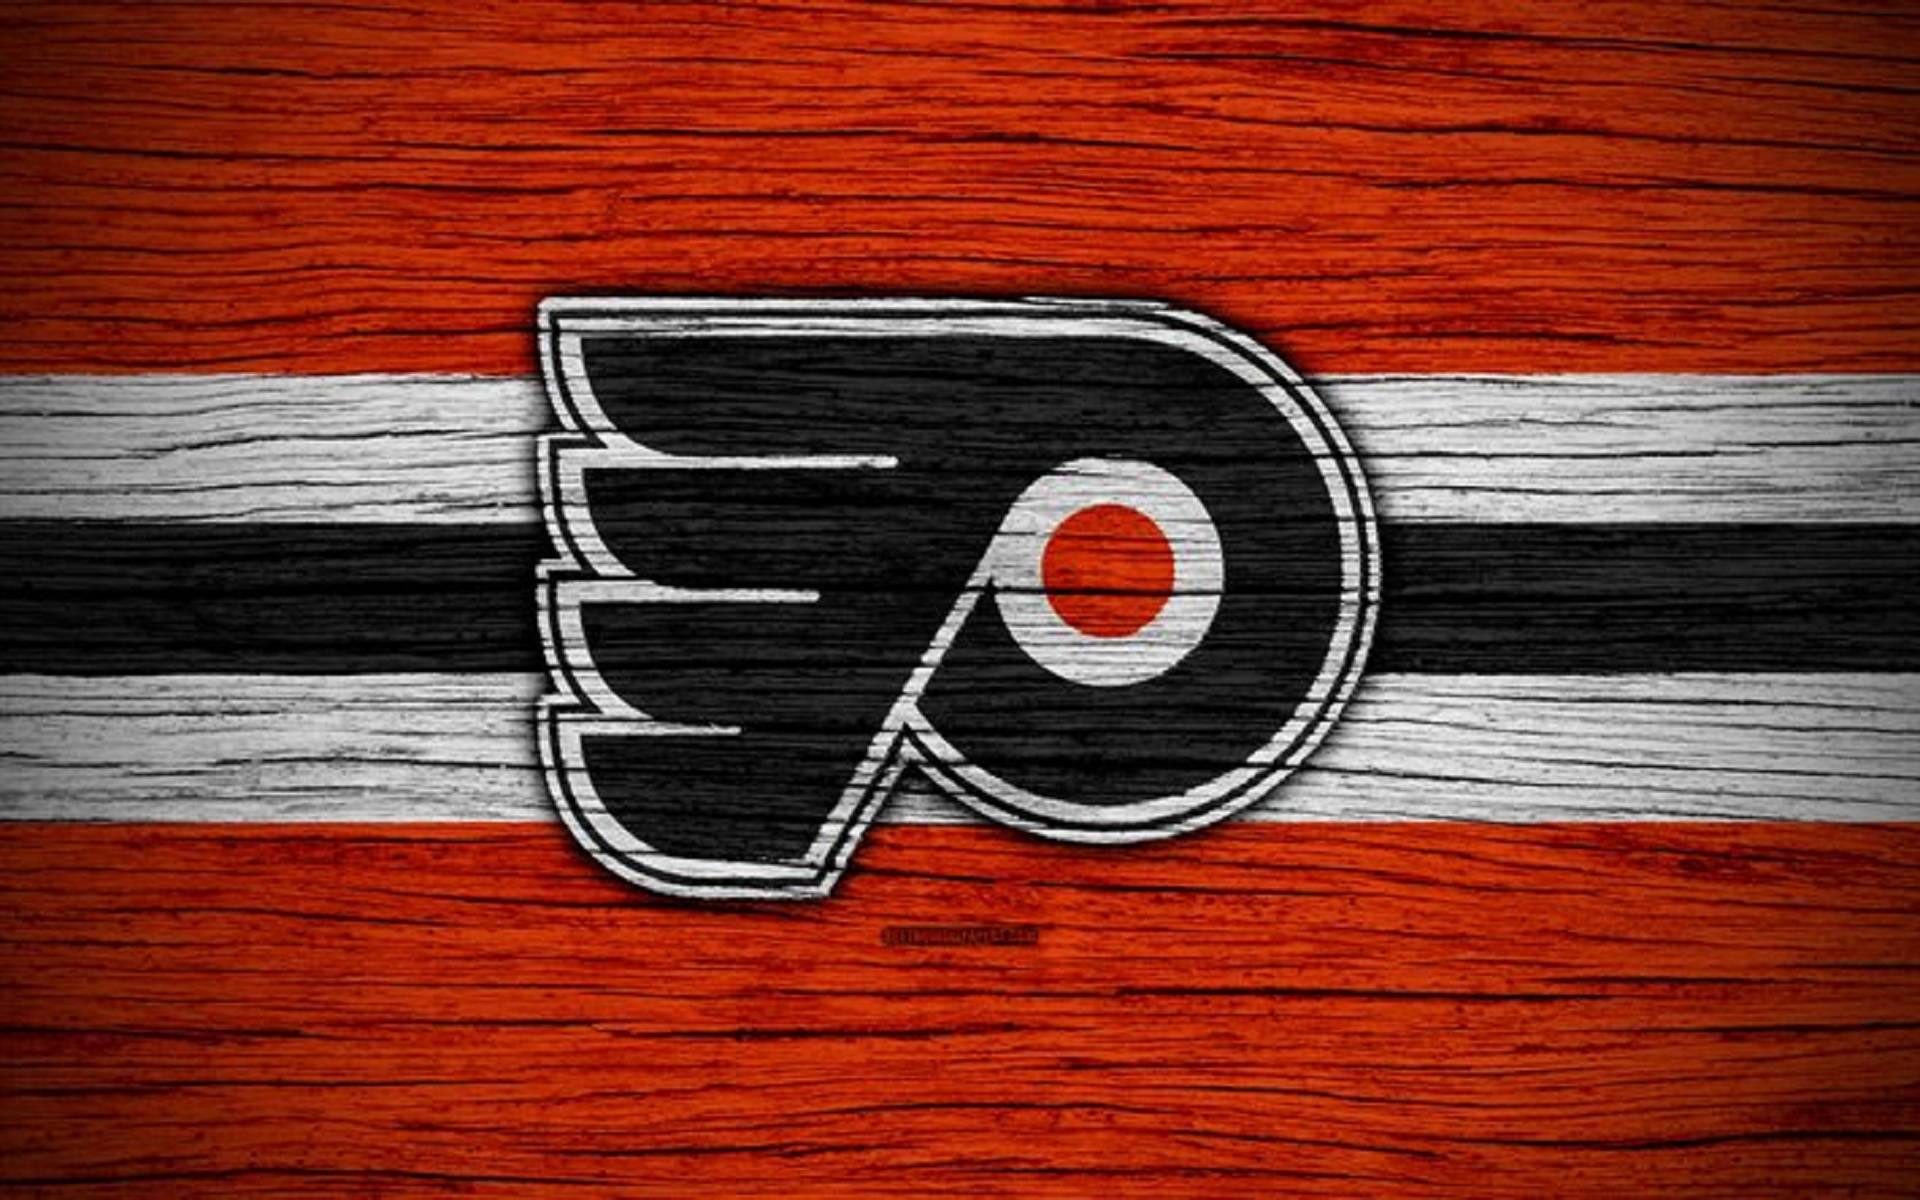 Philadelphia Flyers Logo On Red Wood Background